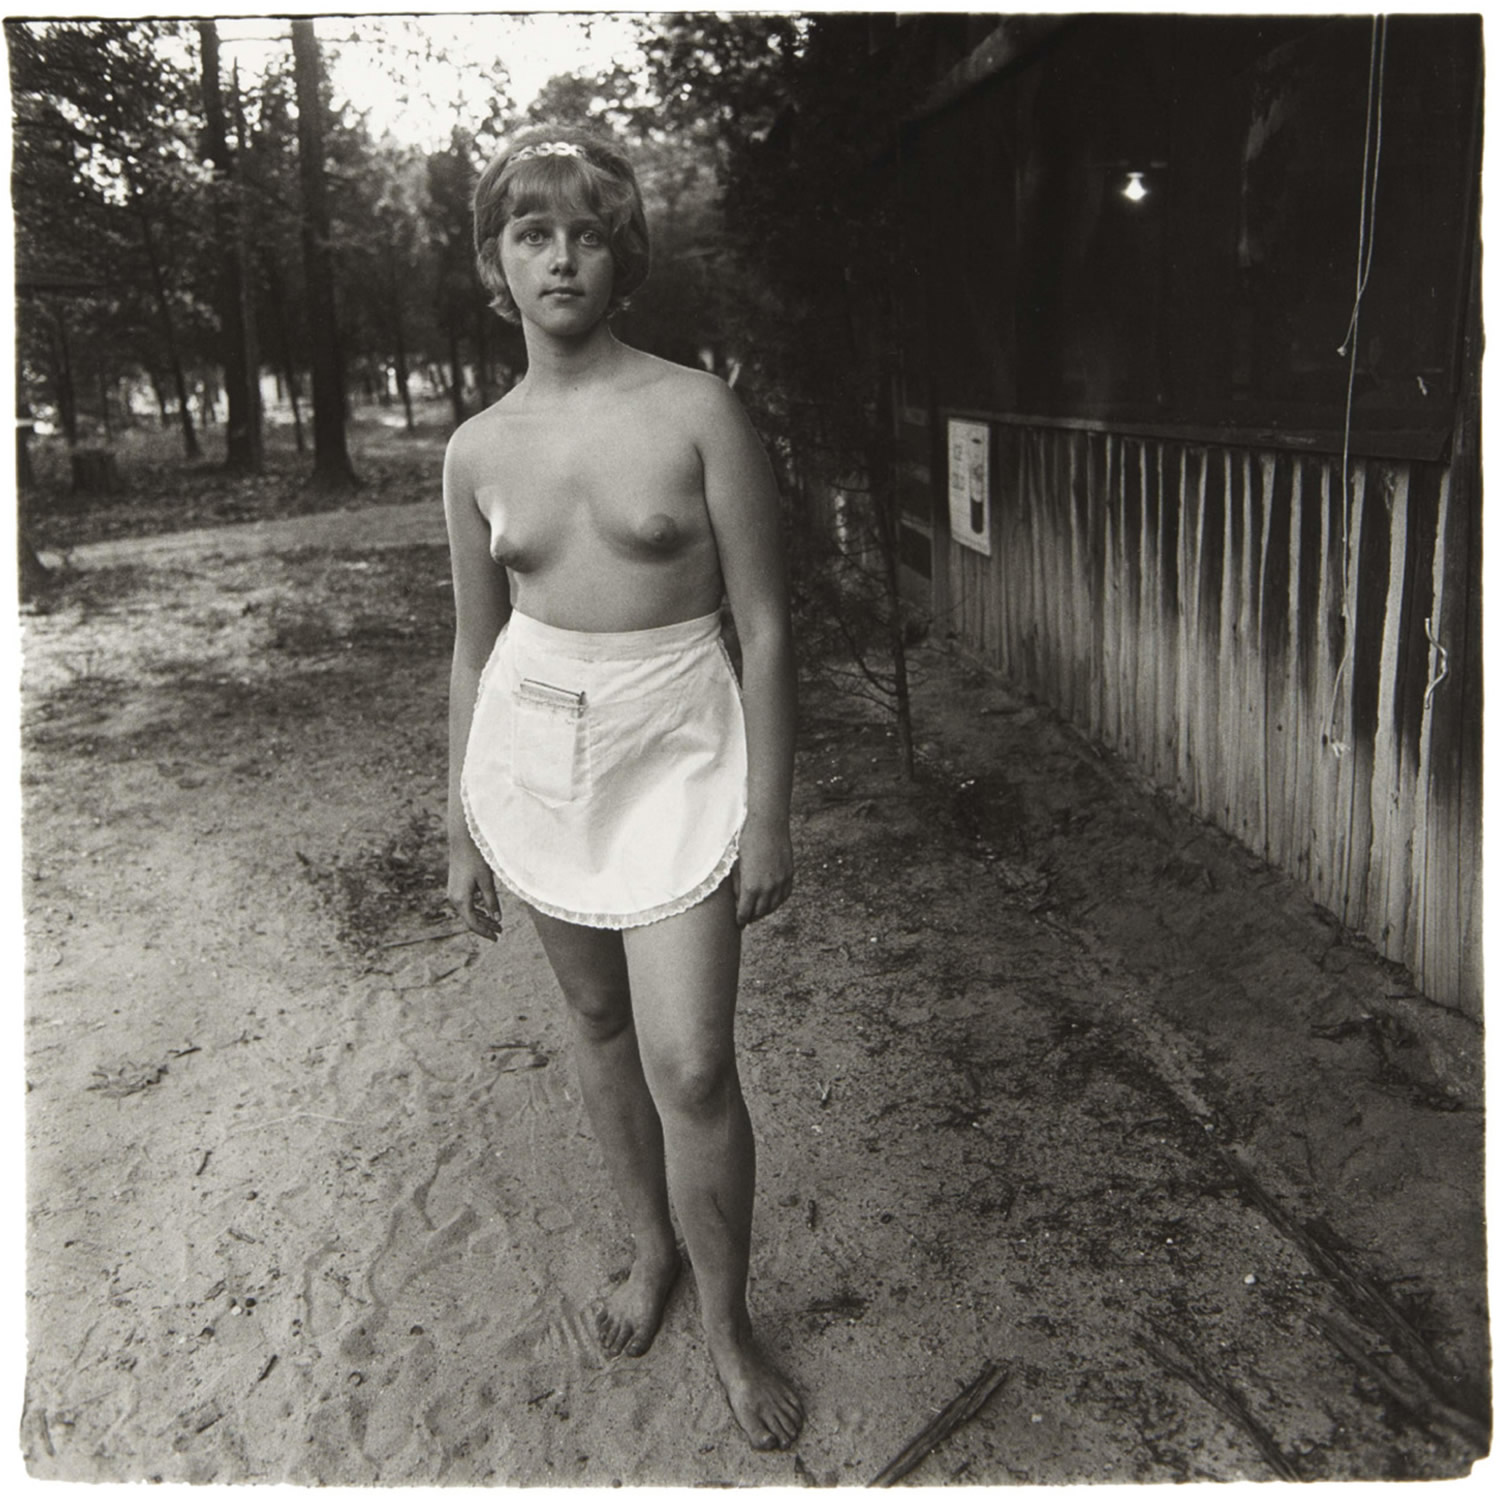 A young waitress at a nudist camp, N.J., 1963